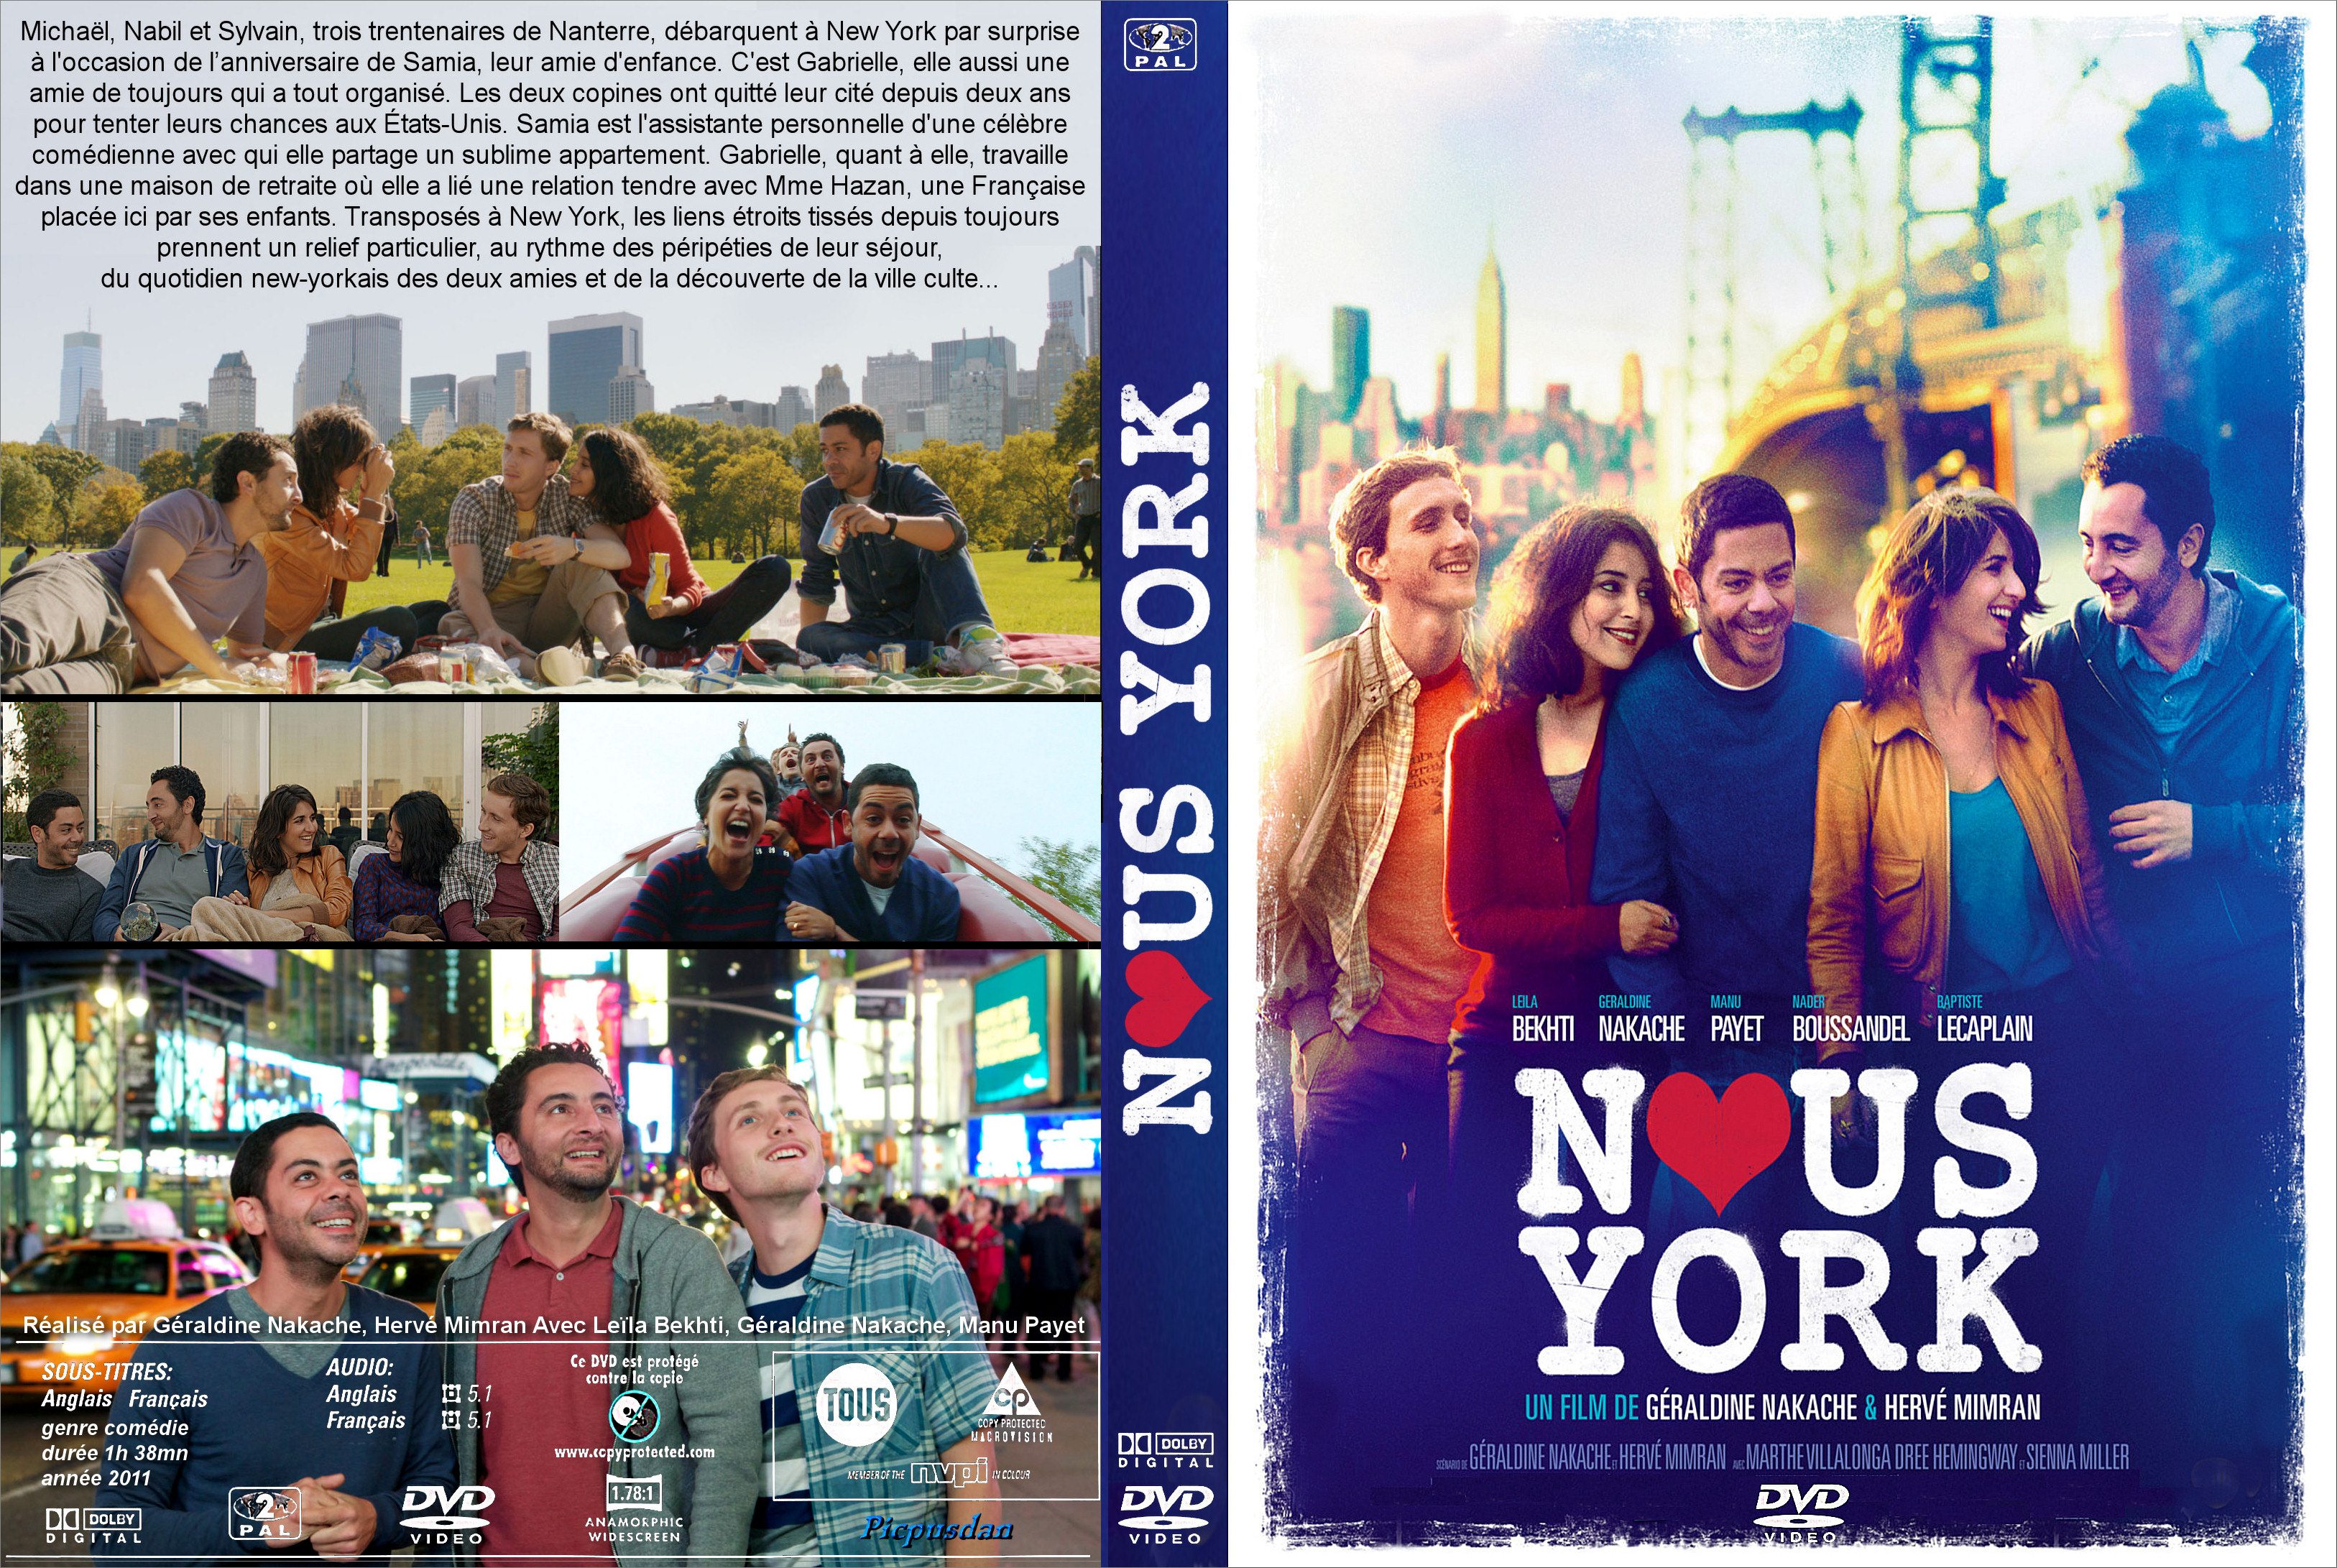 Jaquette DVD Nous York custom